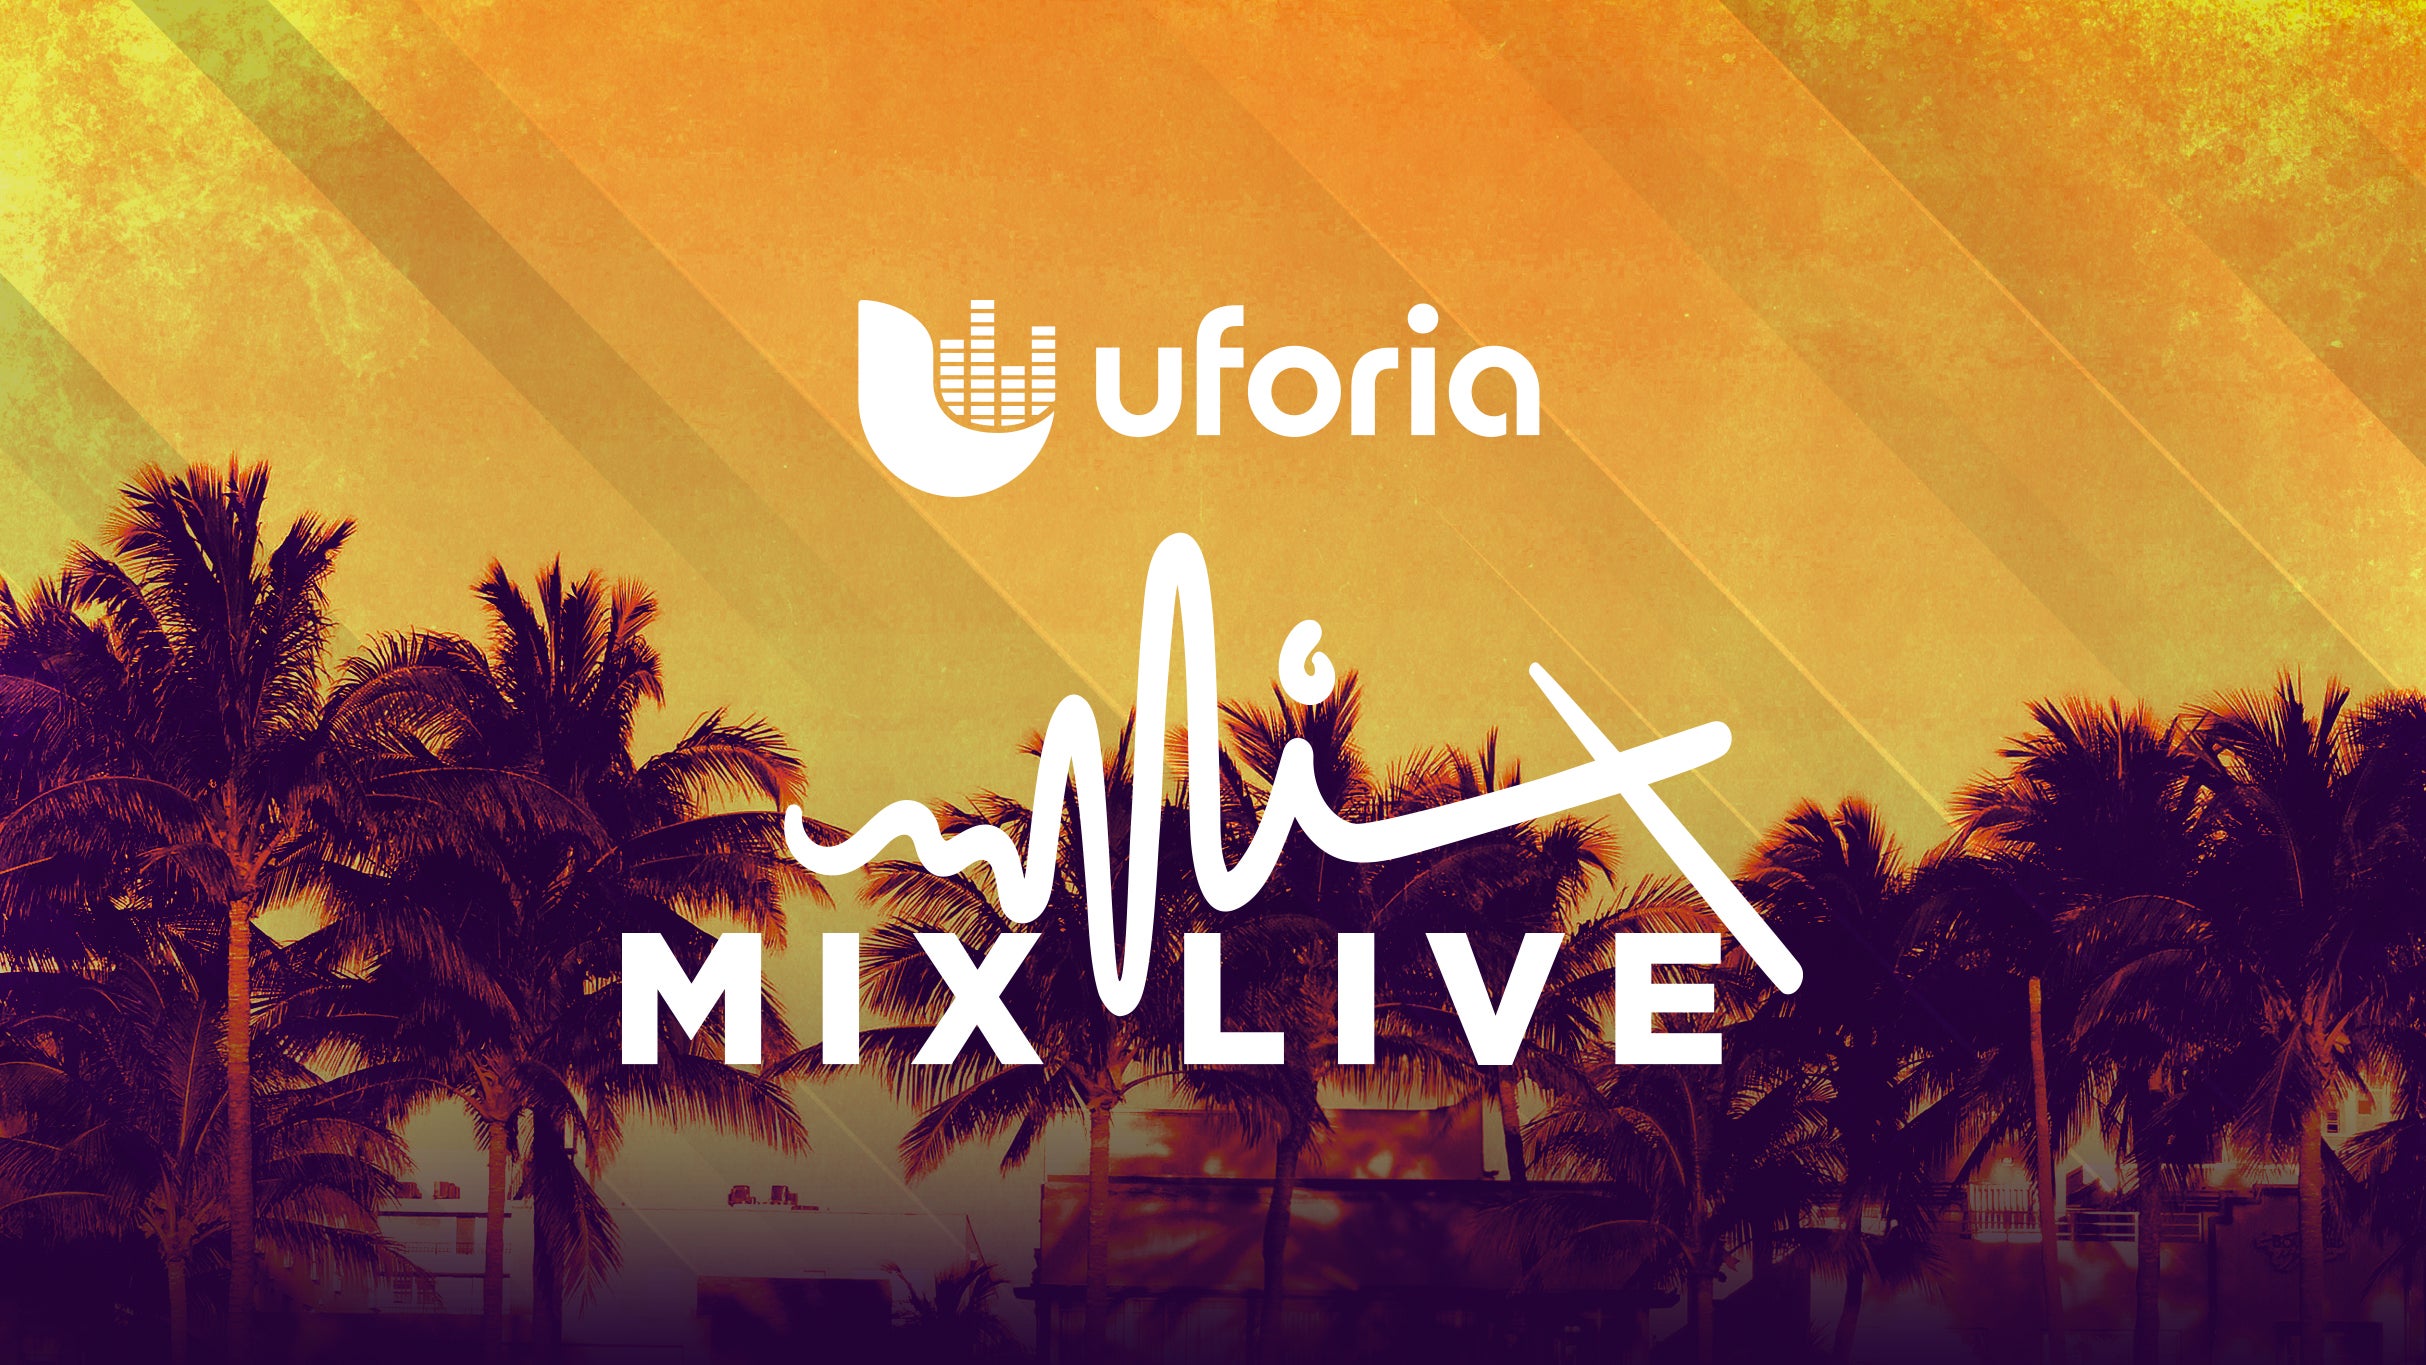 Uforia Mix Live presale password for show tickets in Miami, FL (Kaseya Center)